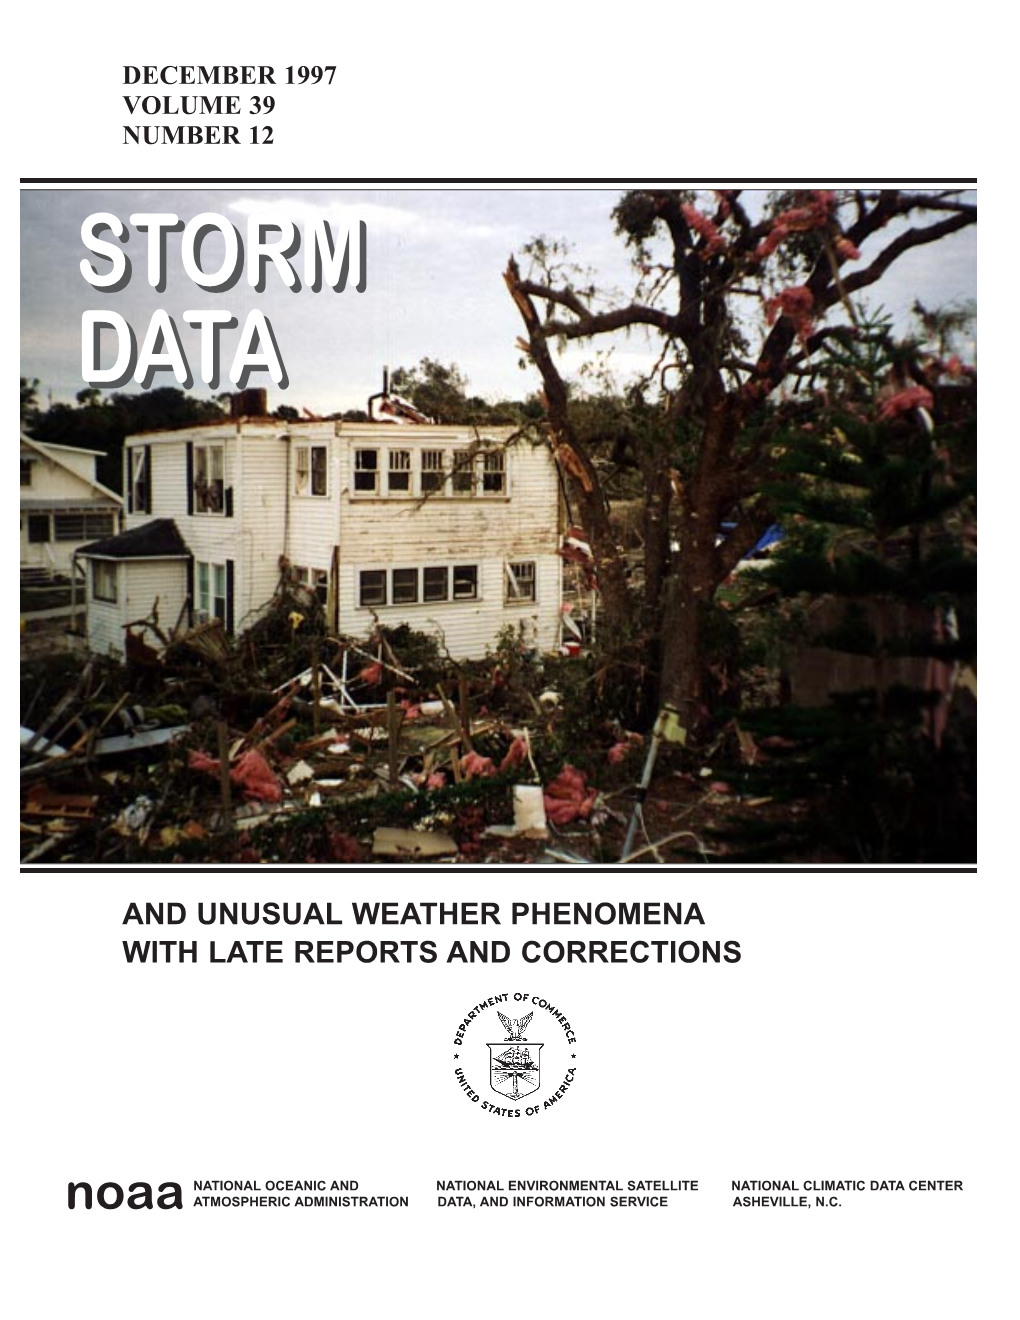 December 1997 Storm Data Publication